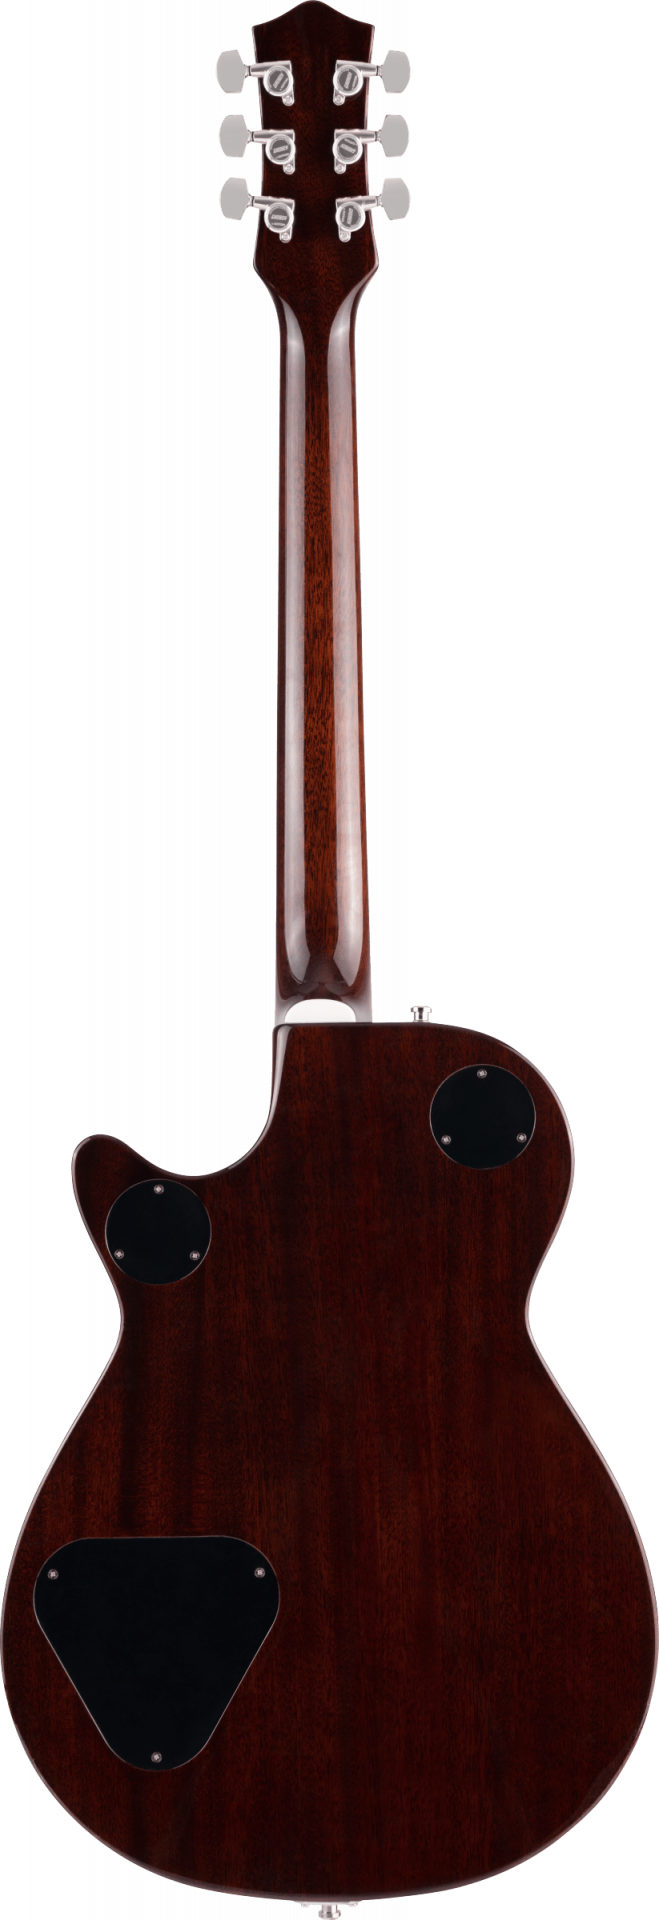 Gretsch G6128T Player's Edition Jet DS Electric Guitar - Sahara Metallic